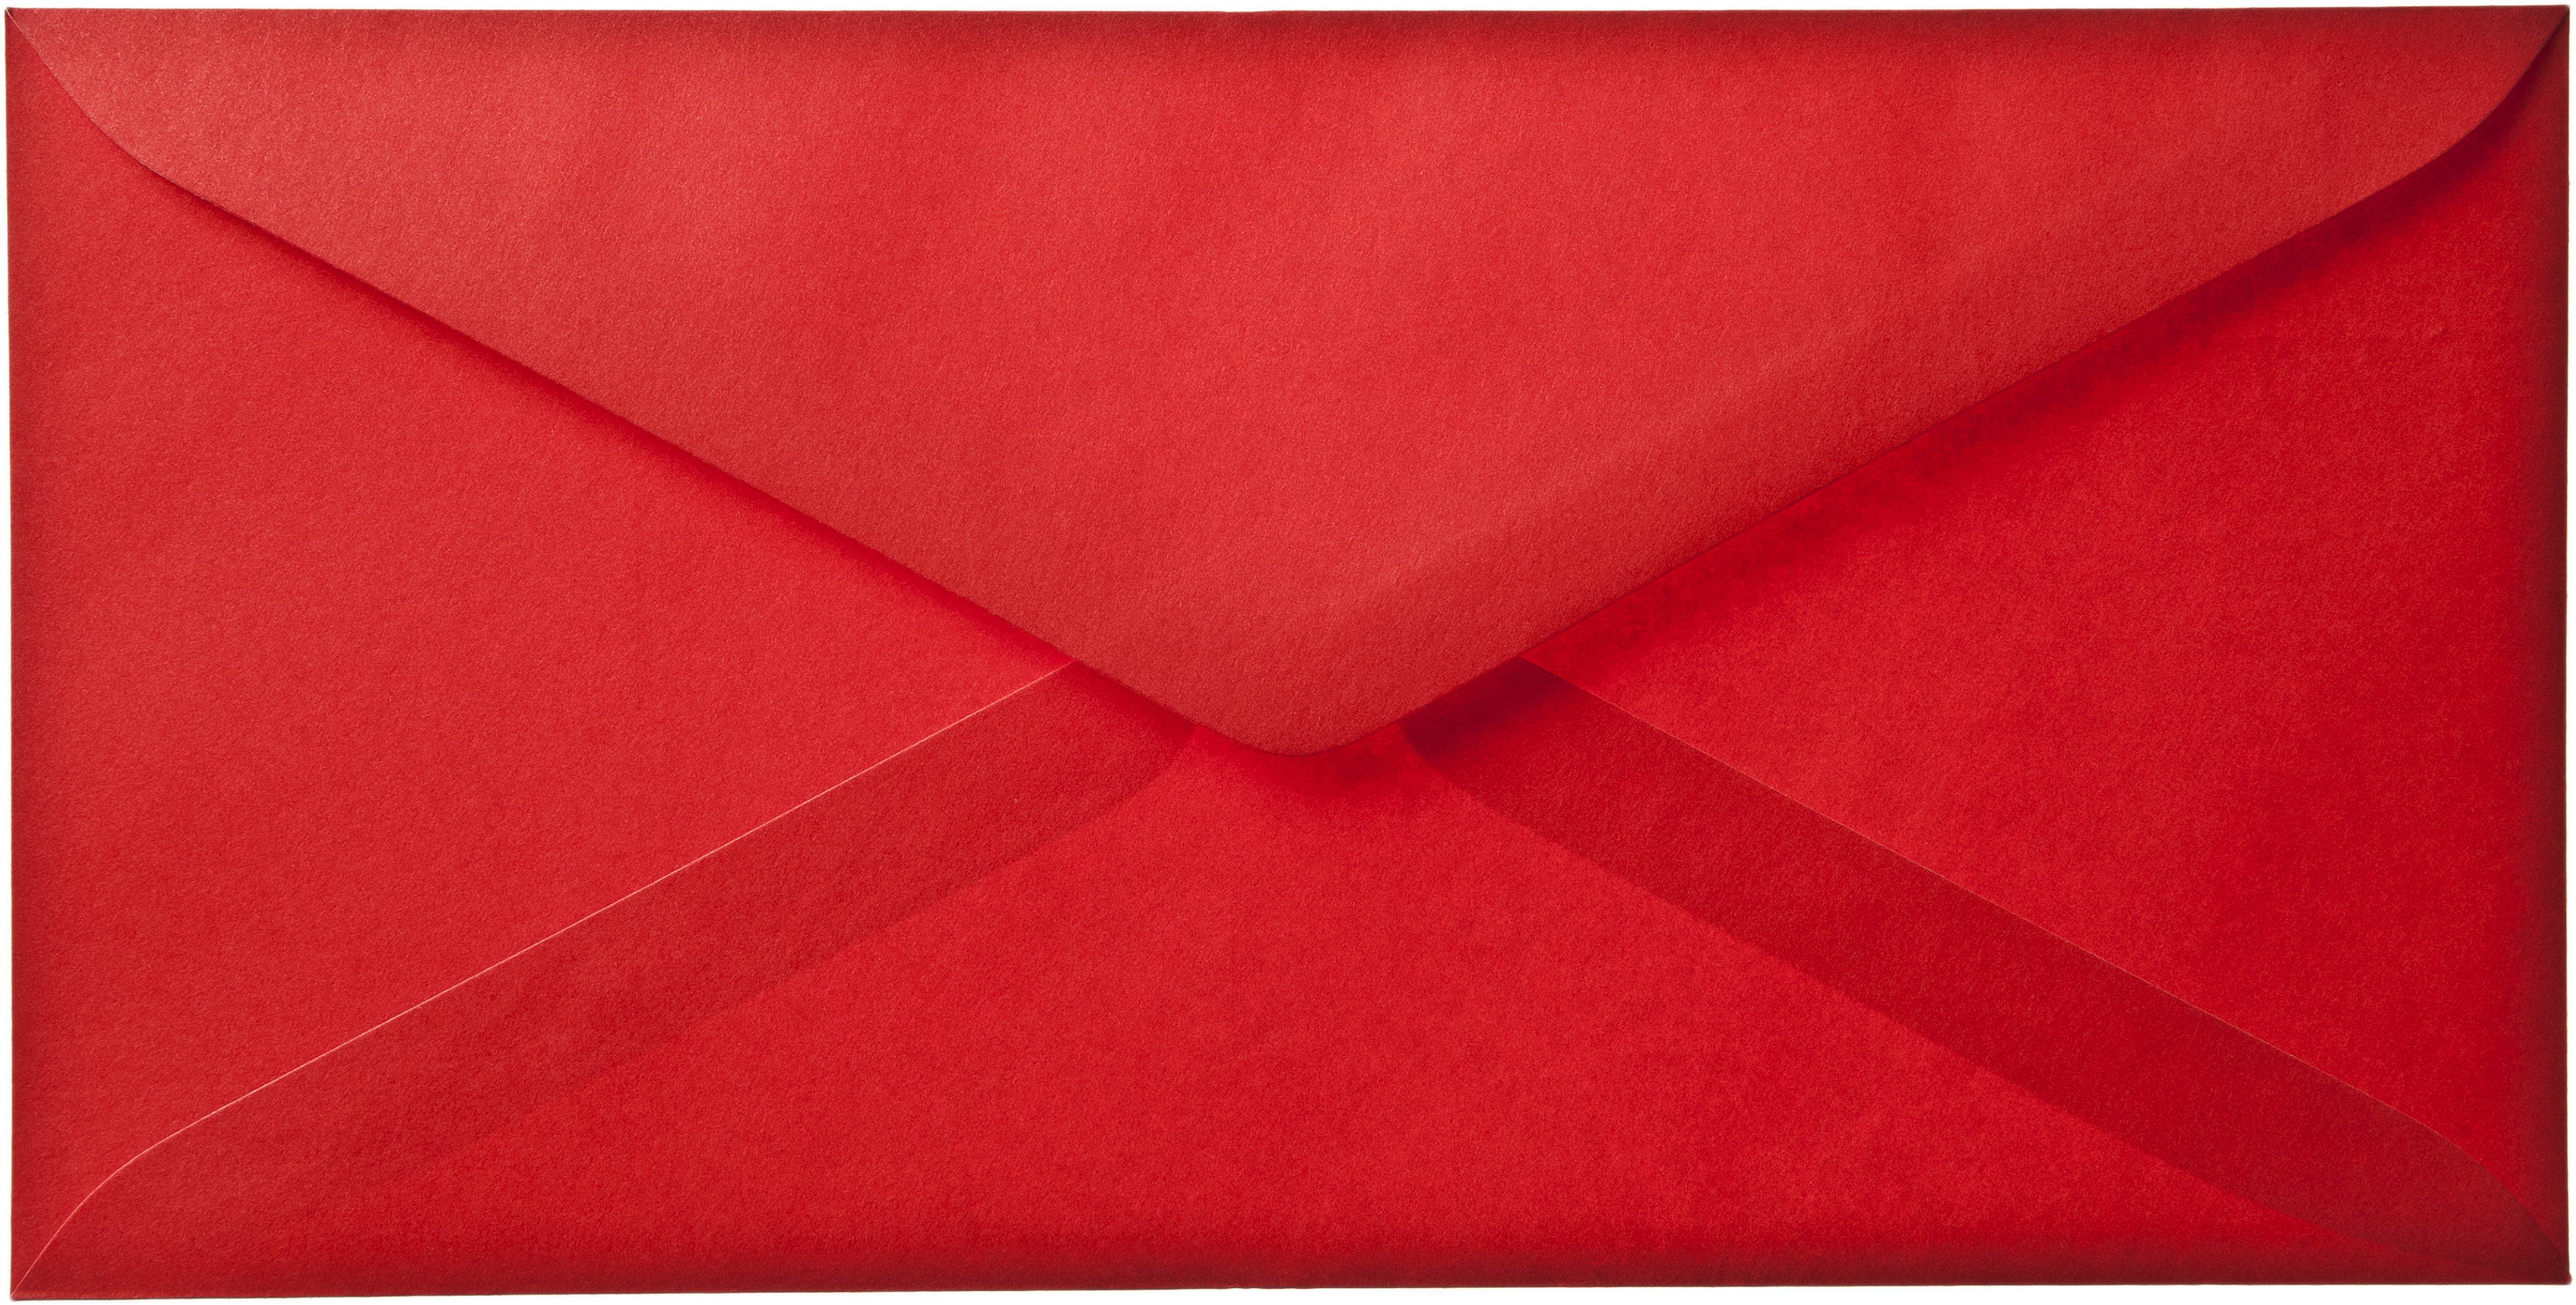 red envelope png